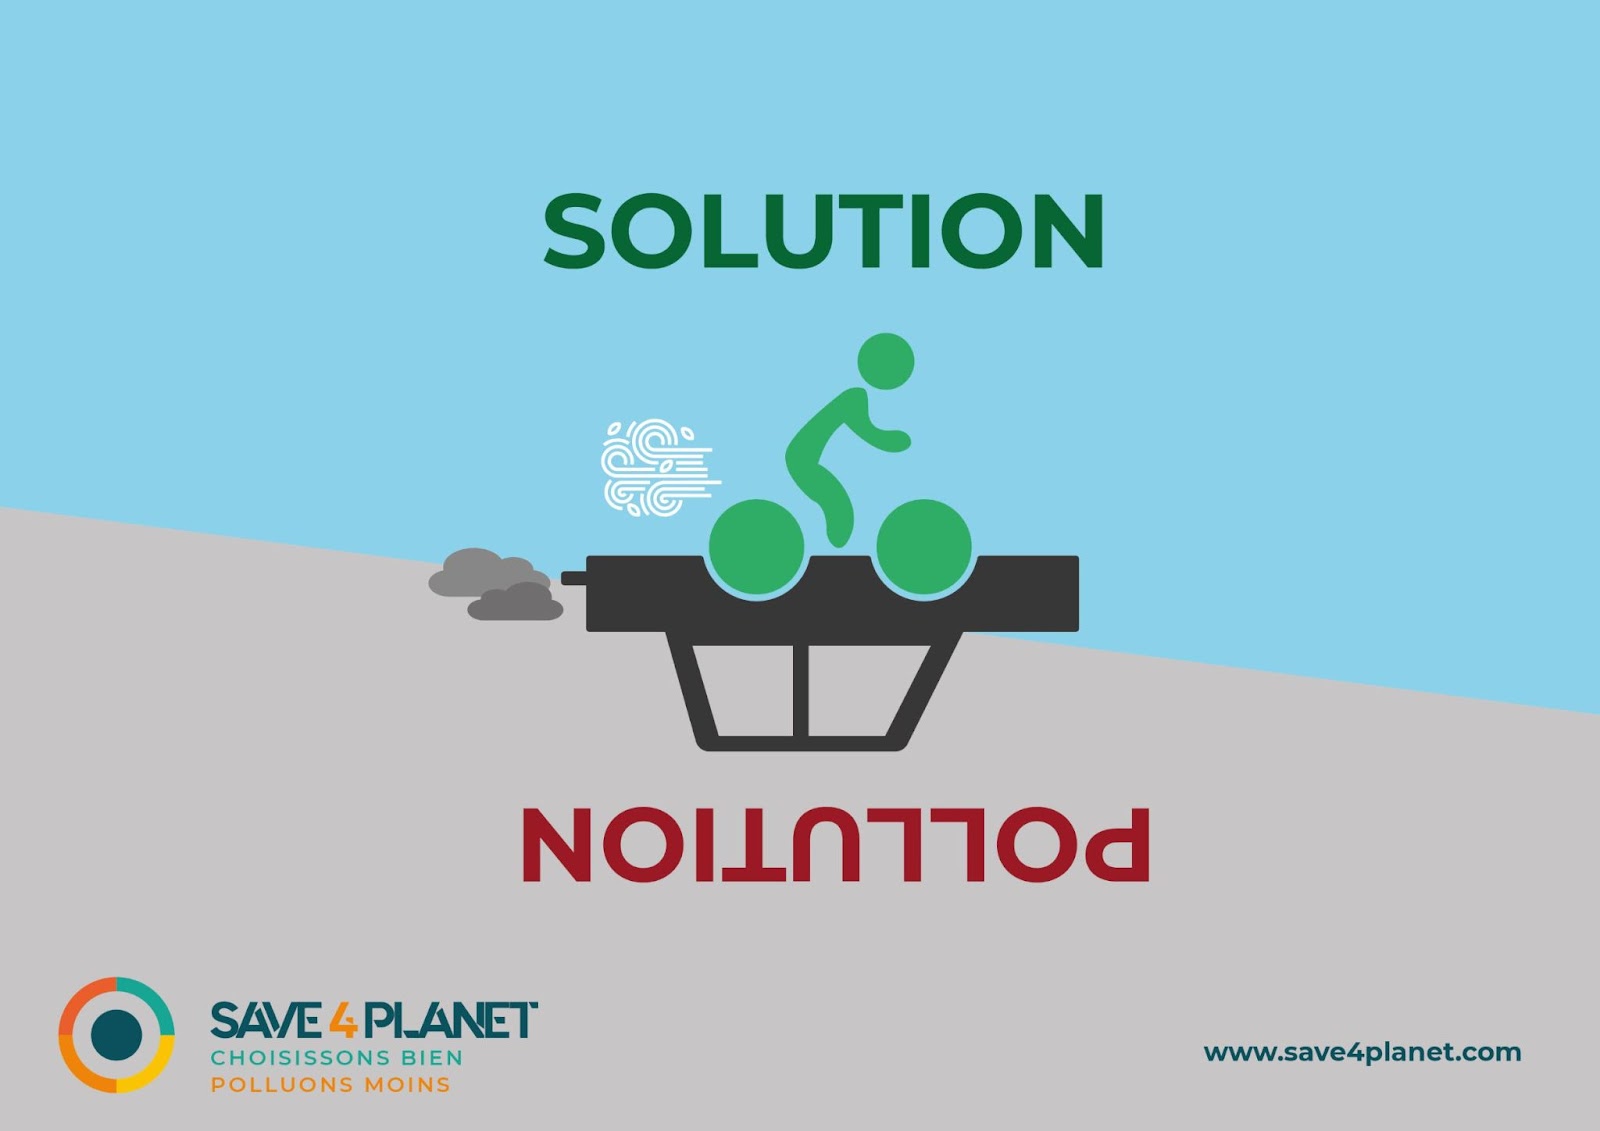 Pollution - solution = velo